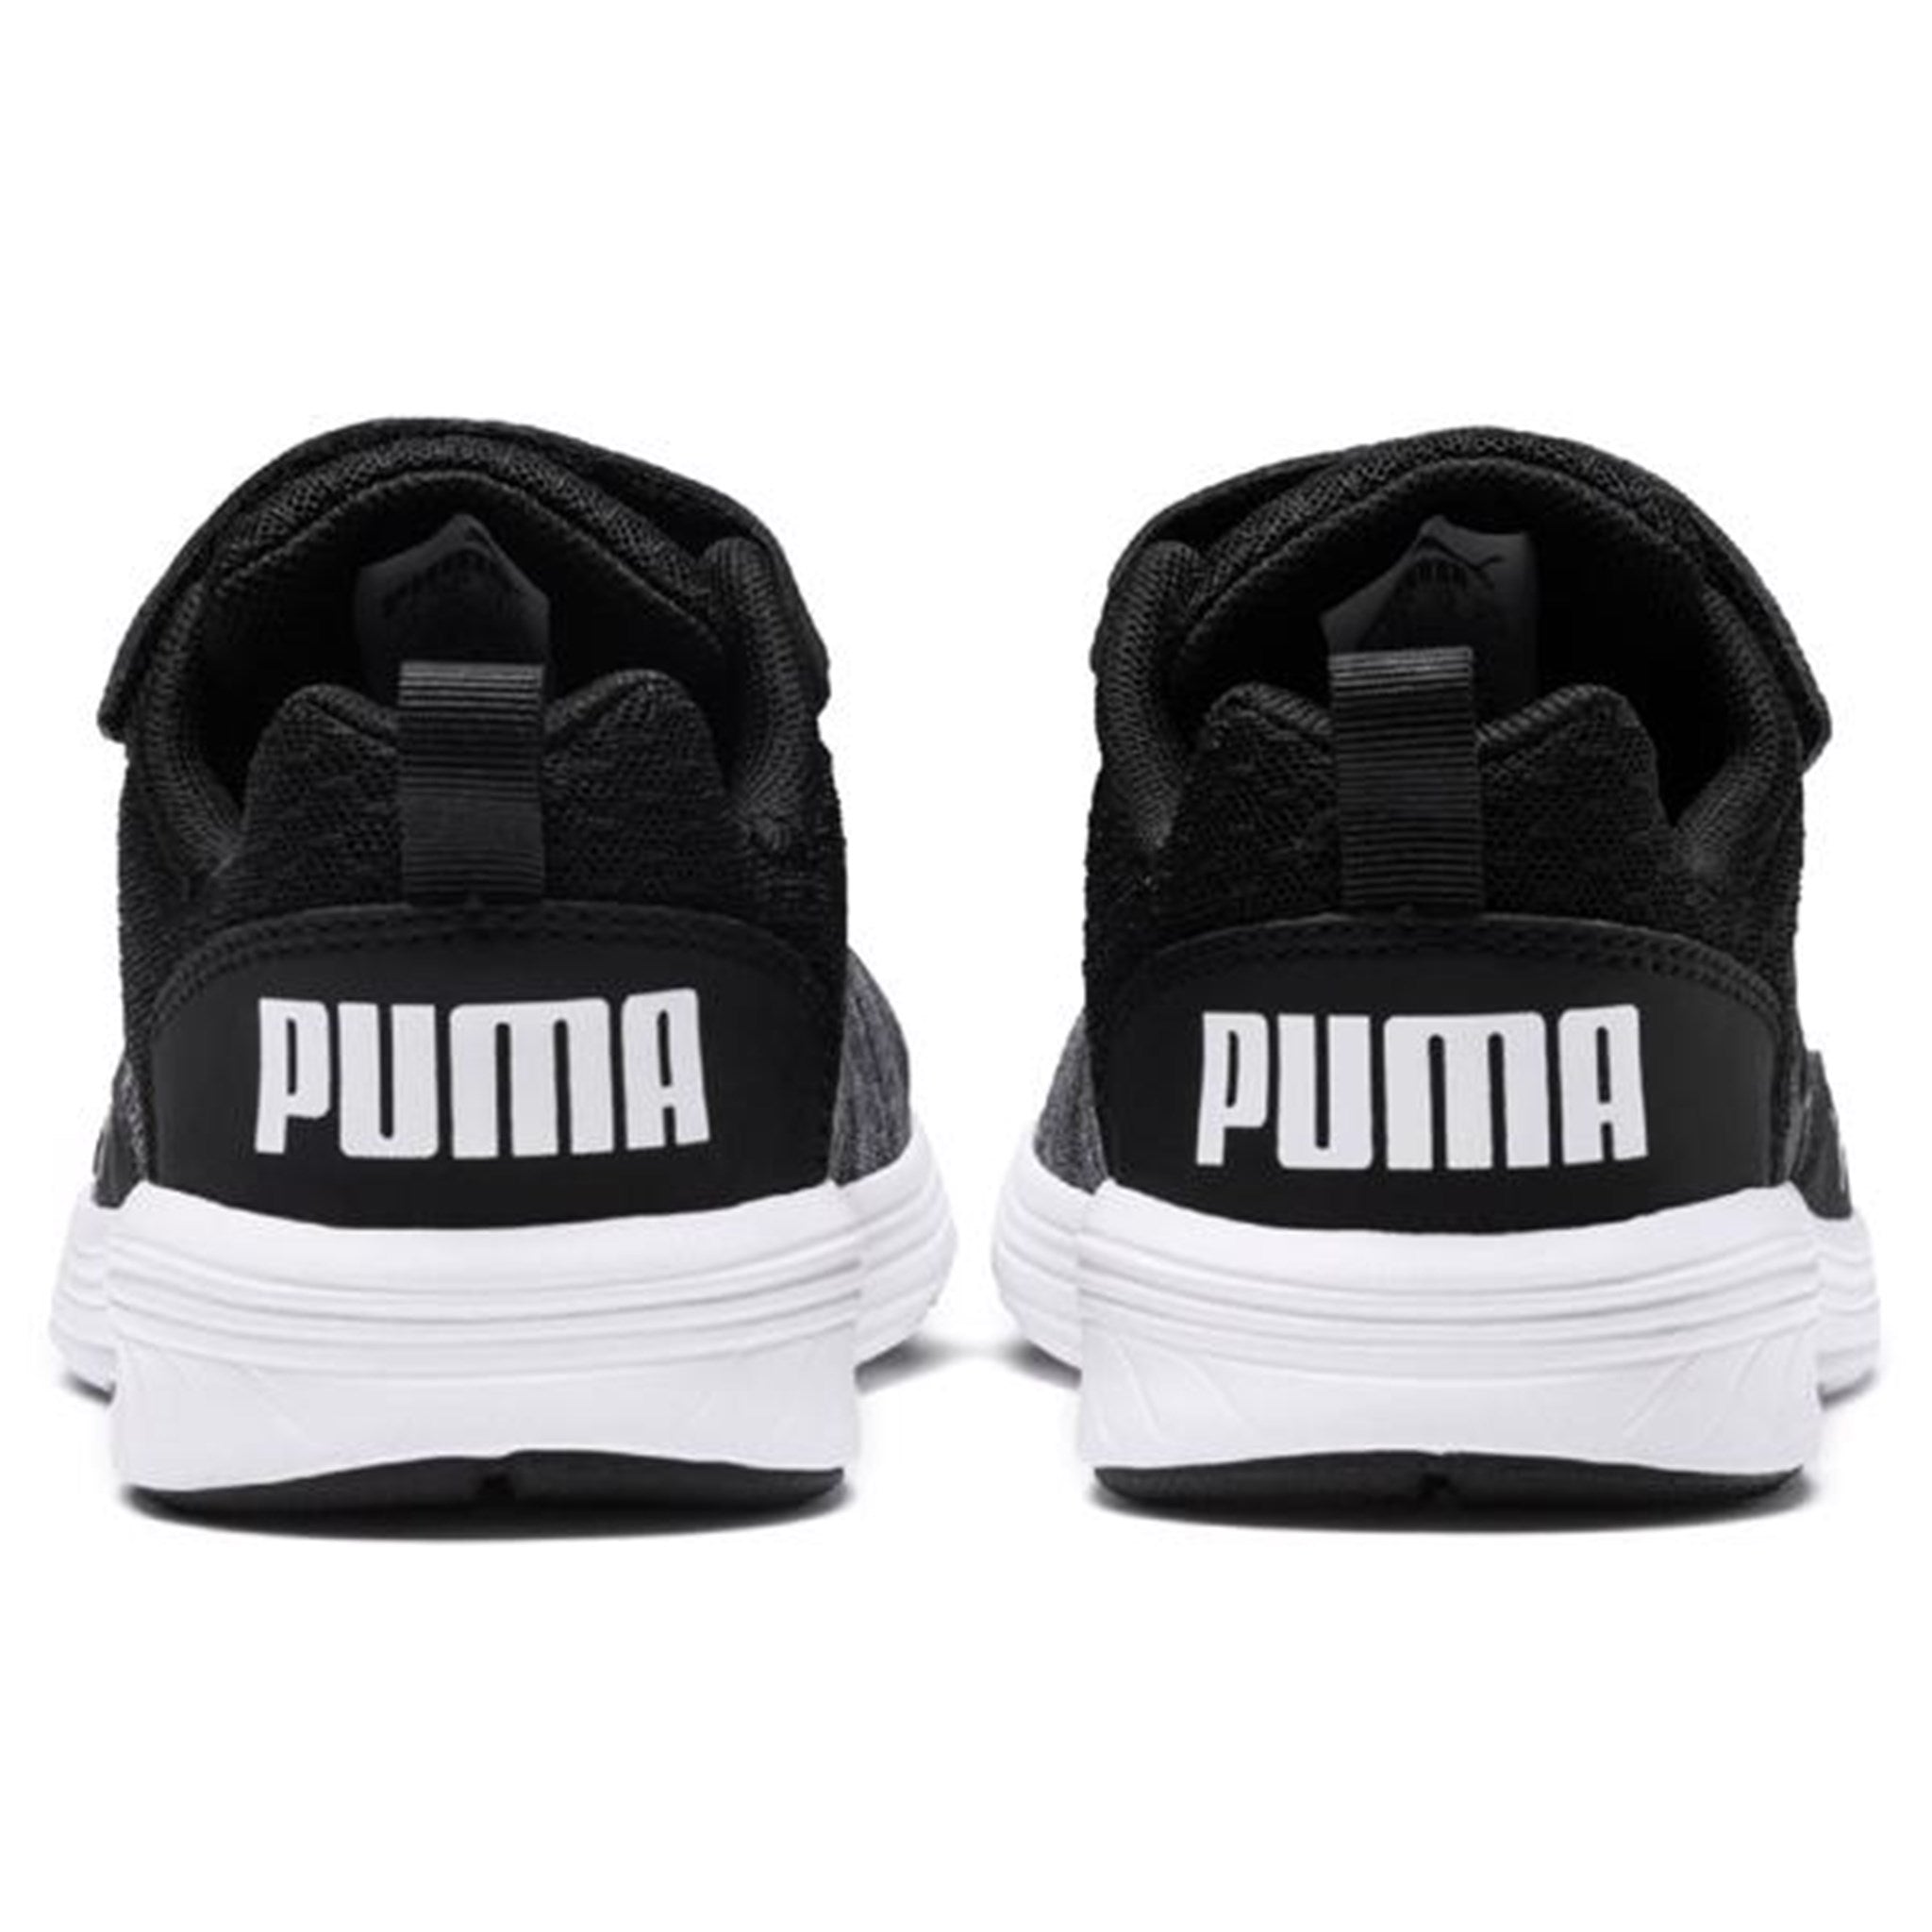 Puma Comet V Infant Sneakers White/Black 2